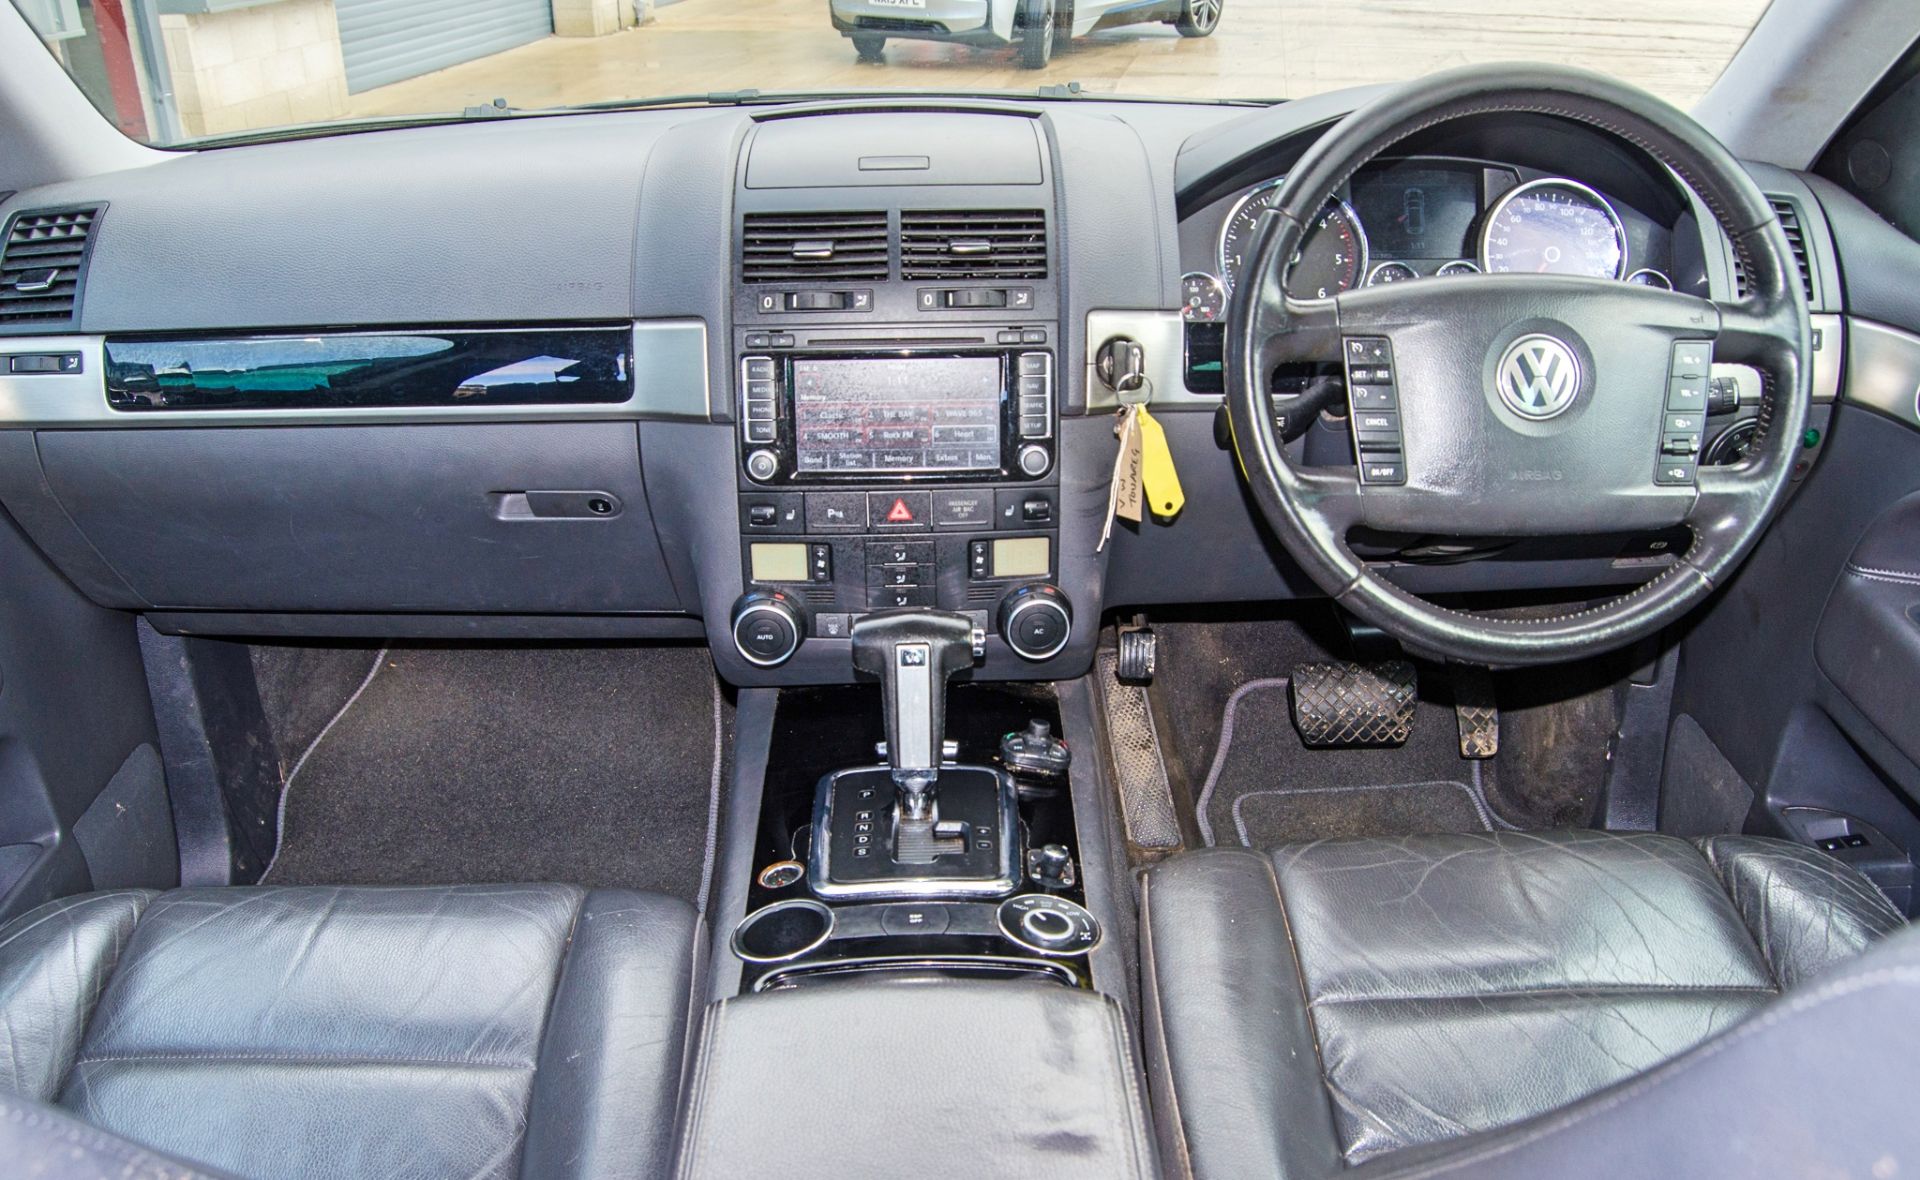 Volkswagen Touareg Altitude V6 2967cc TDi automatic 5 door estate car Registration Number: MF10 - Image 28 of 37